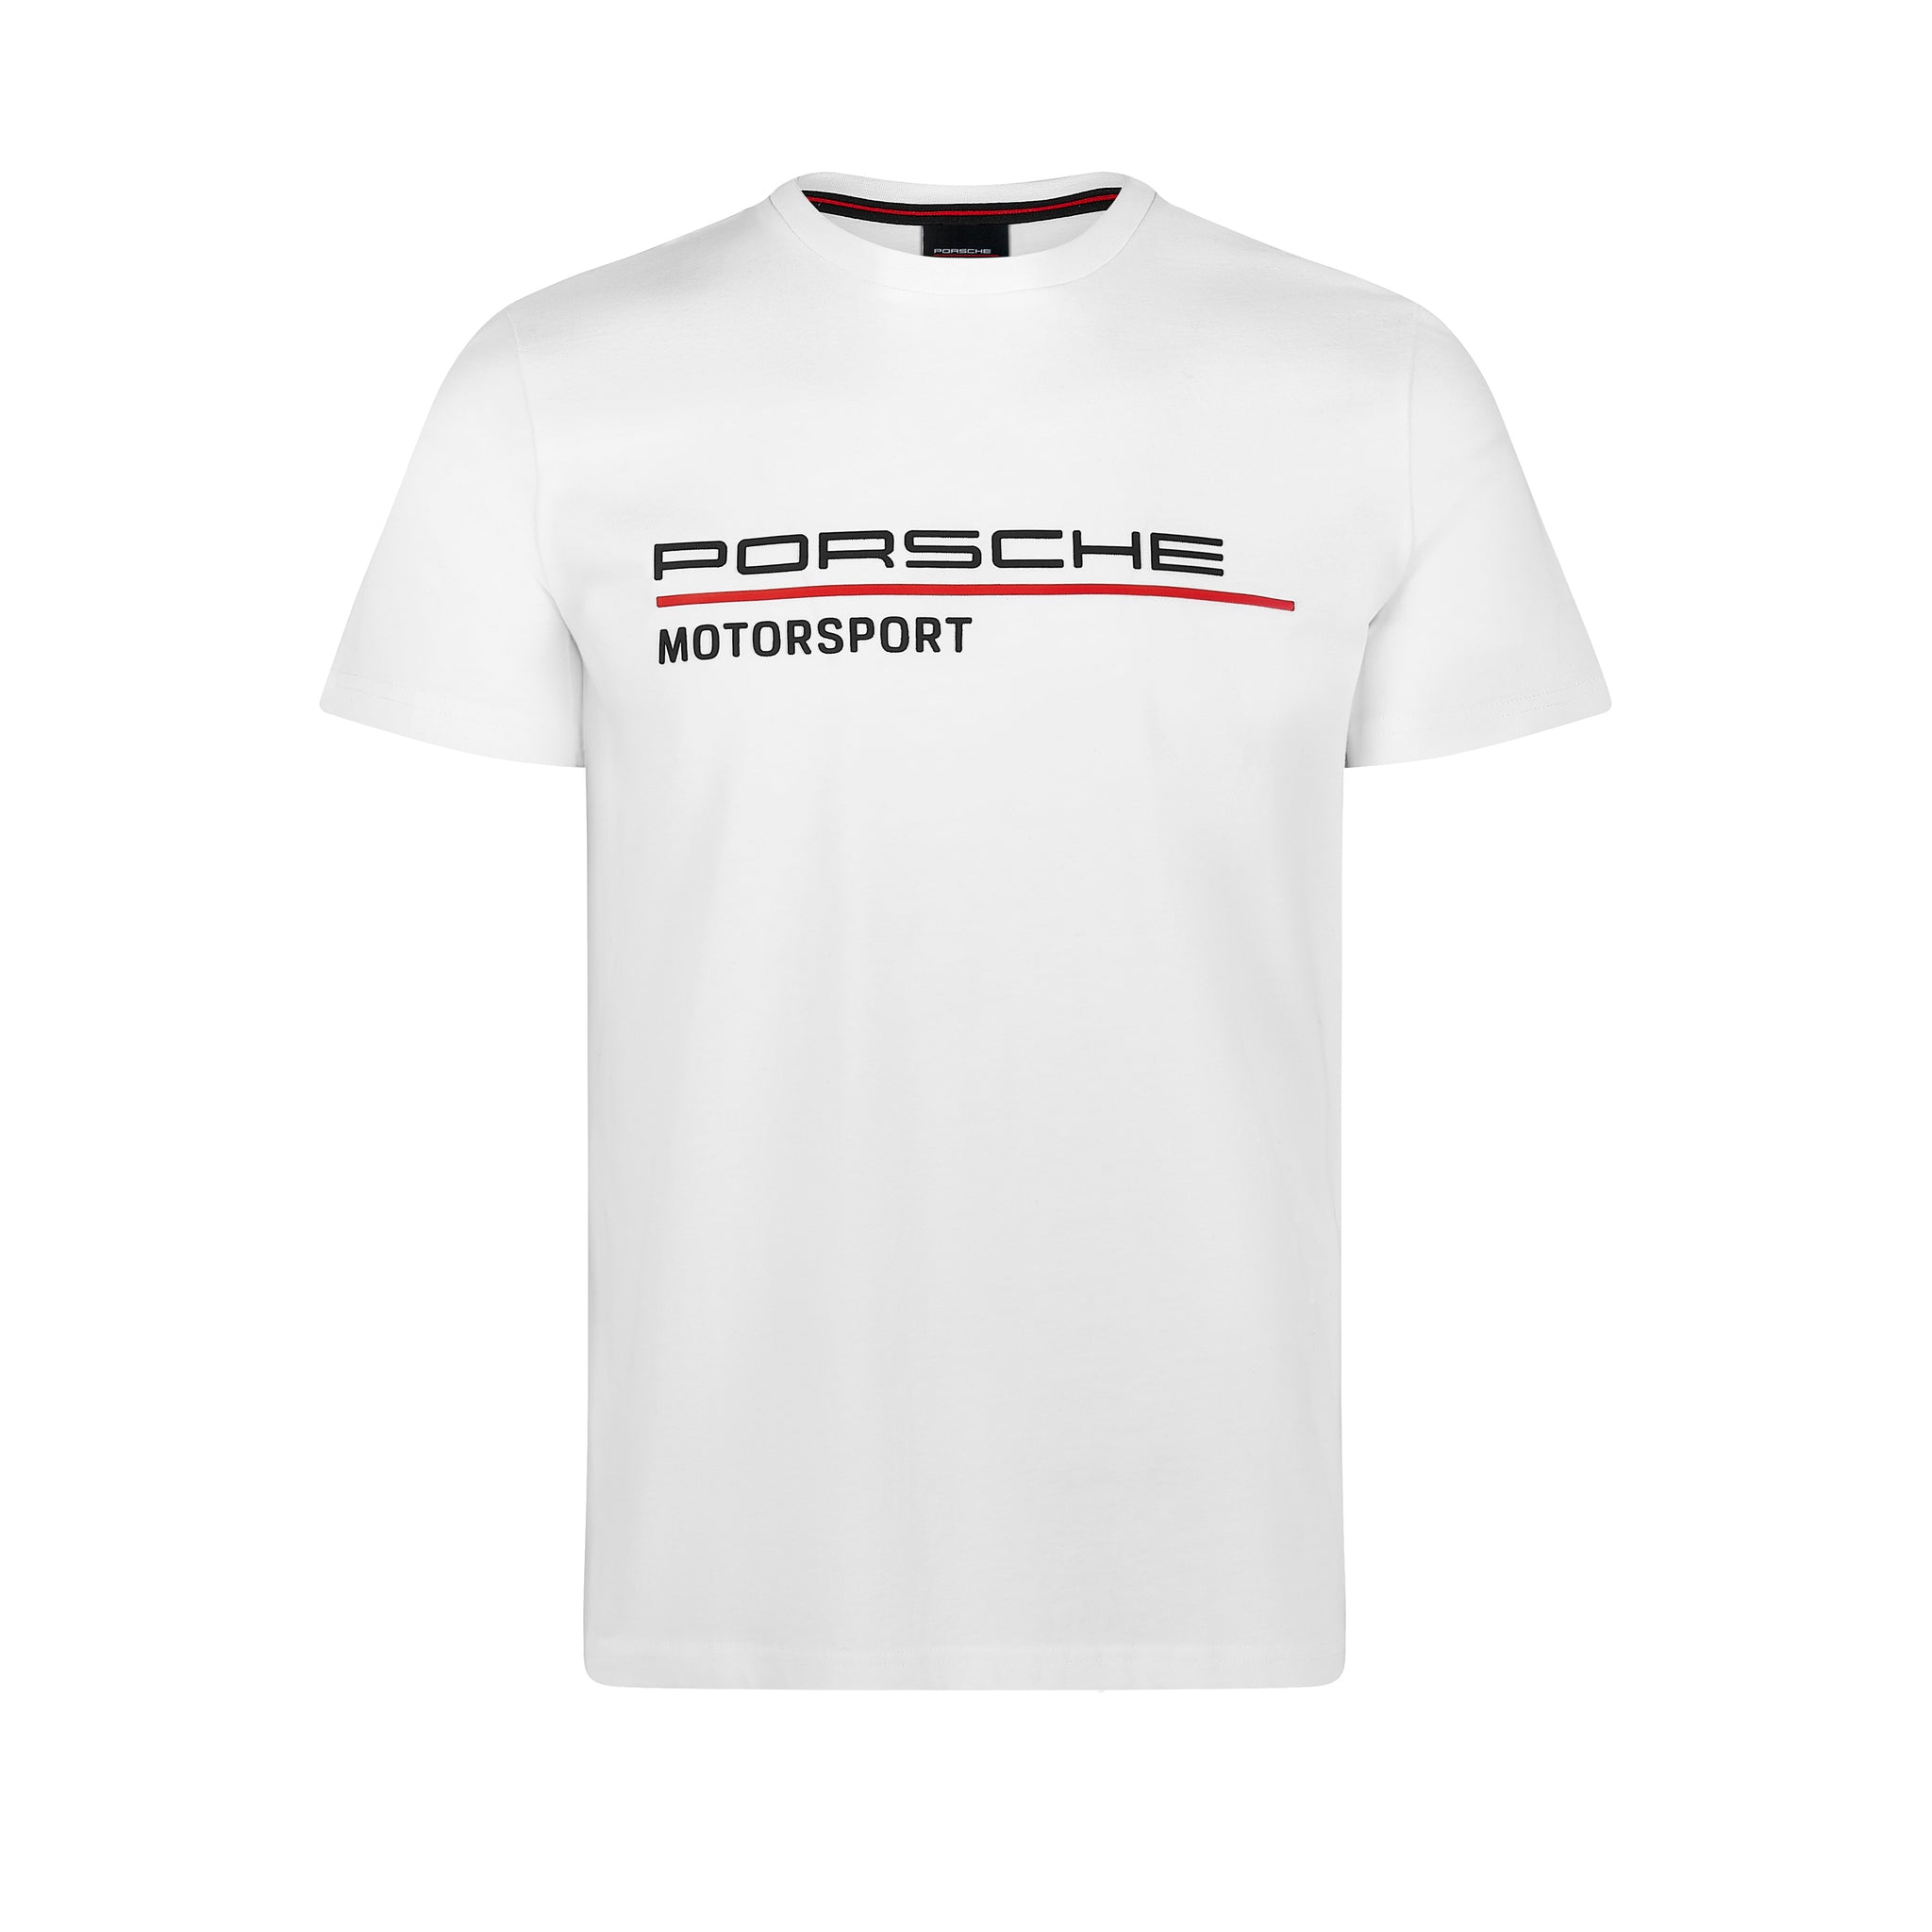 Porsche Motorsport Official Team Merchandise T-shirt White - 2019/20 ...